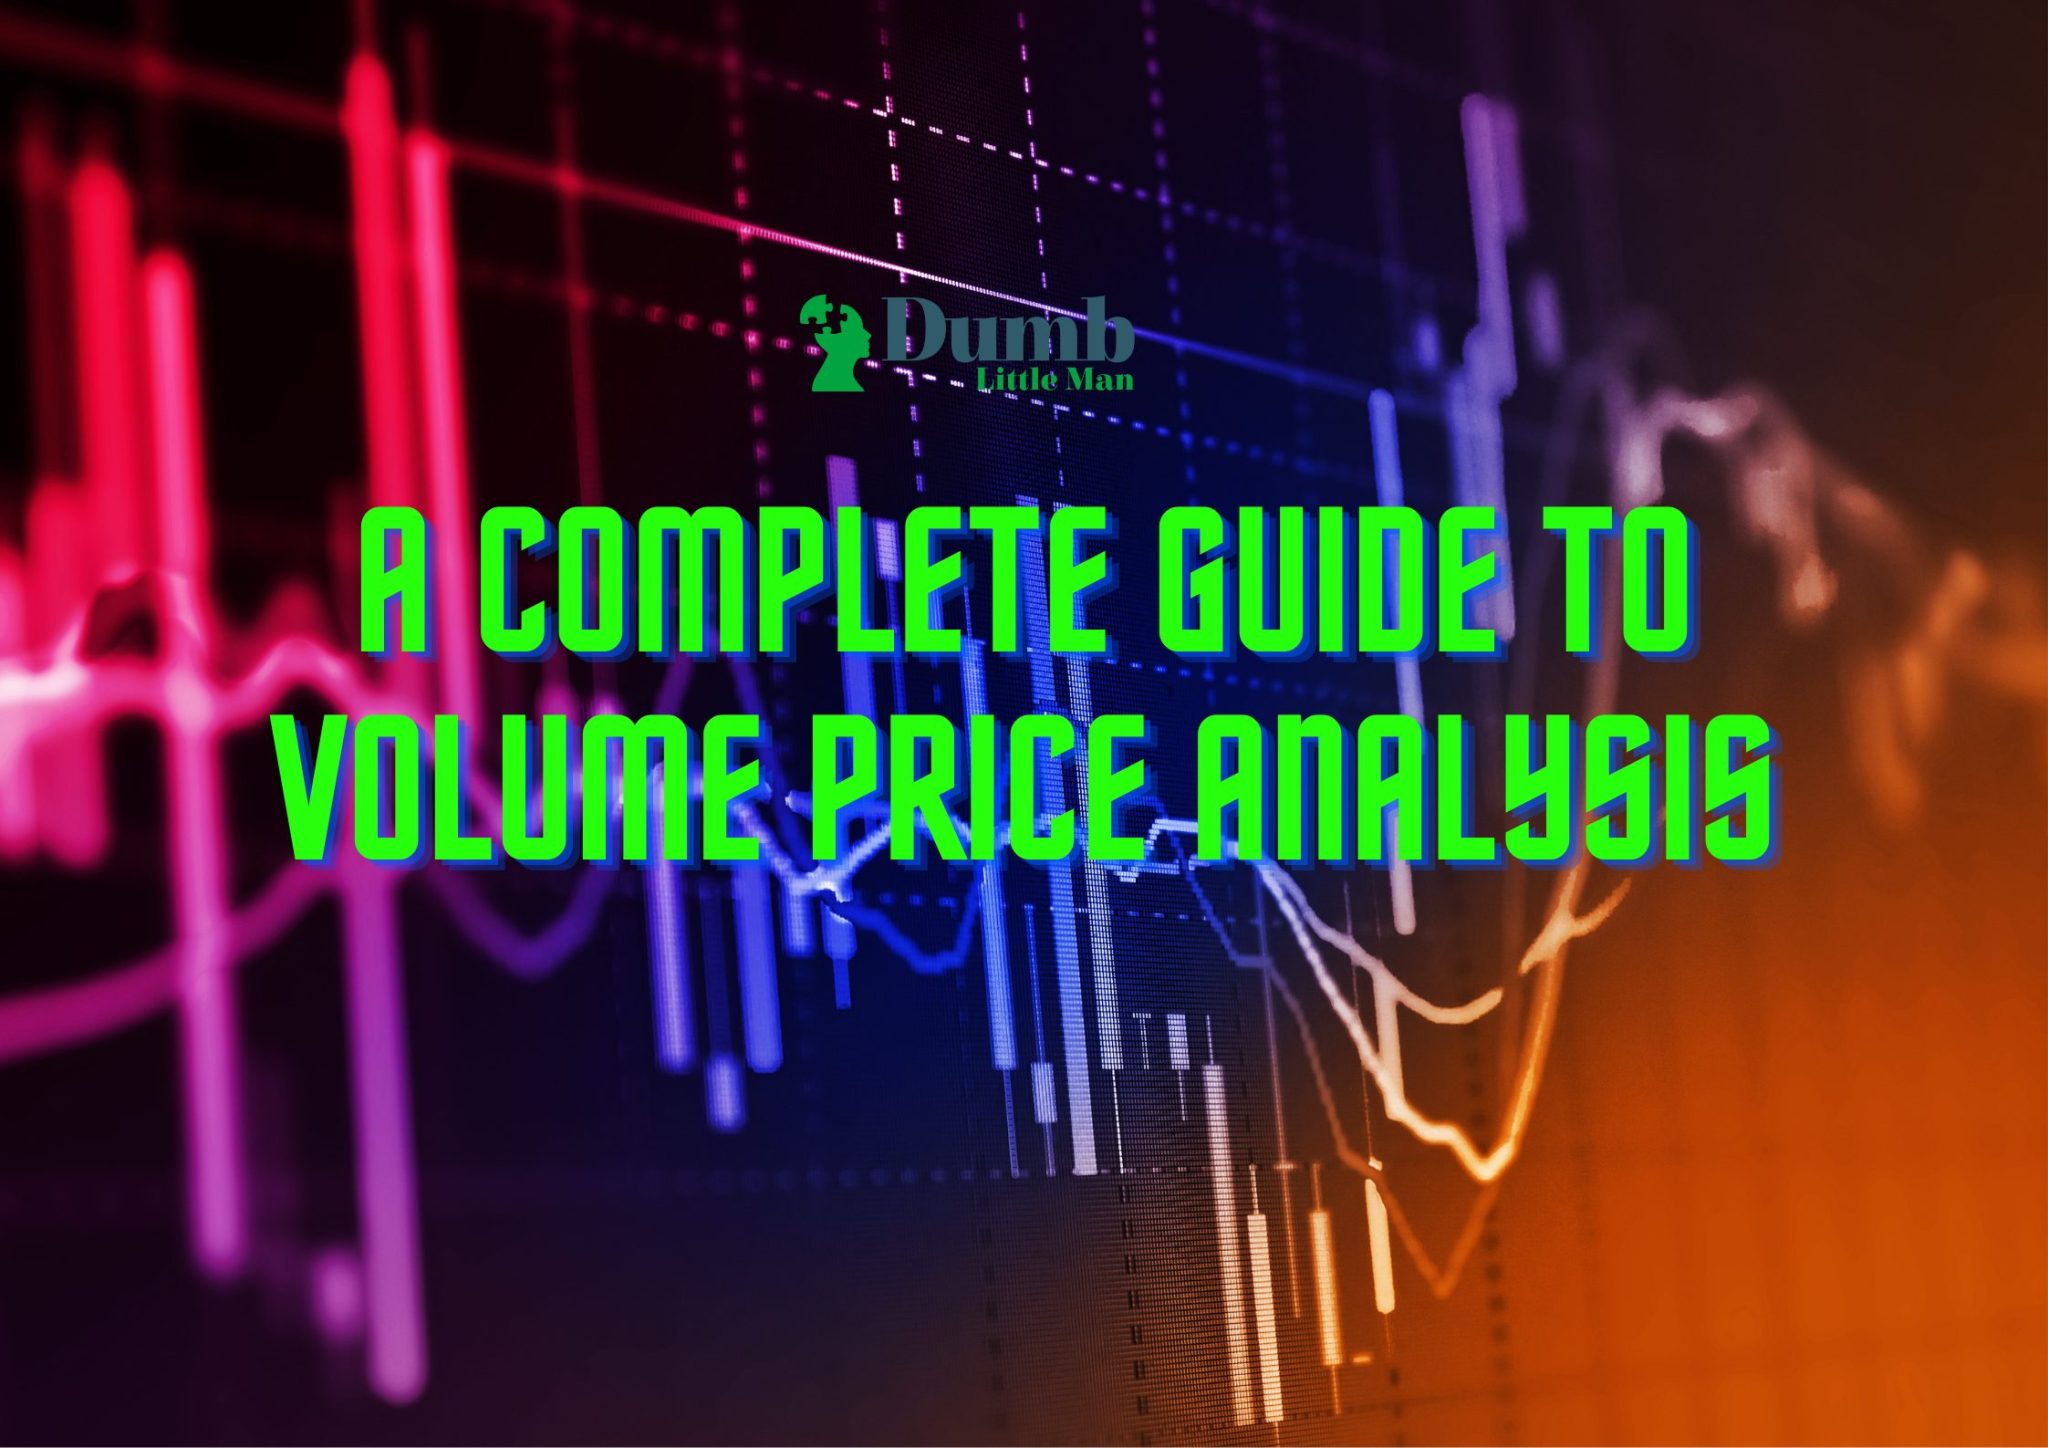 Volume Price Analysis 2048x1448 